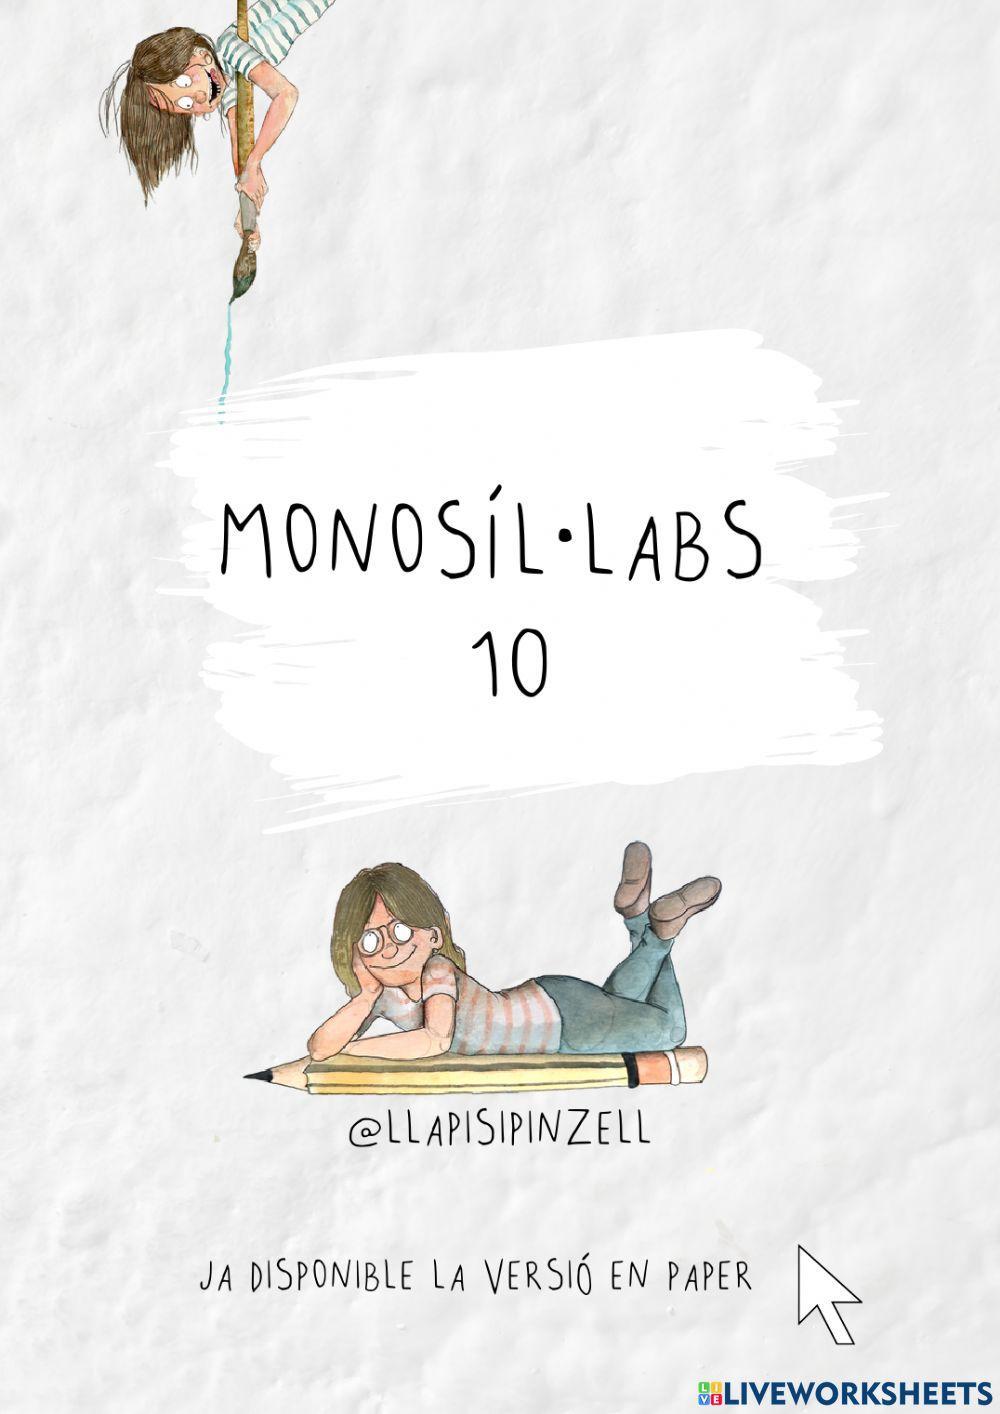 monosíl·labs 10